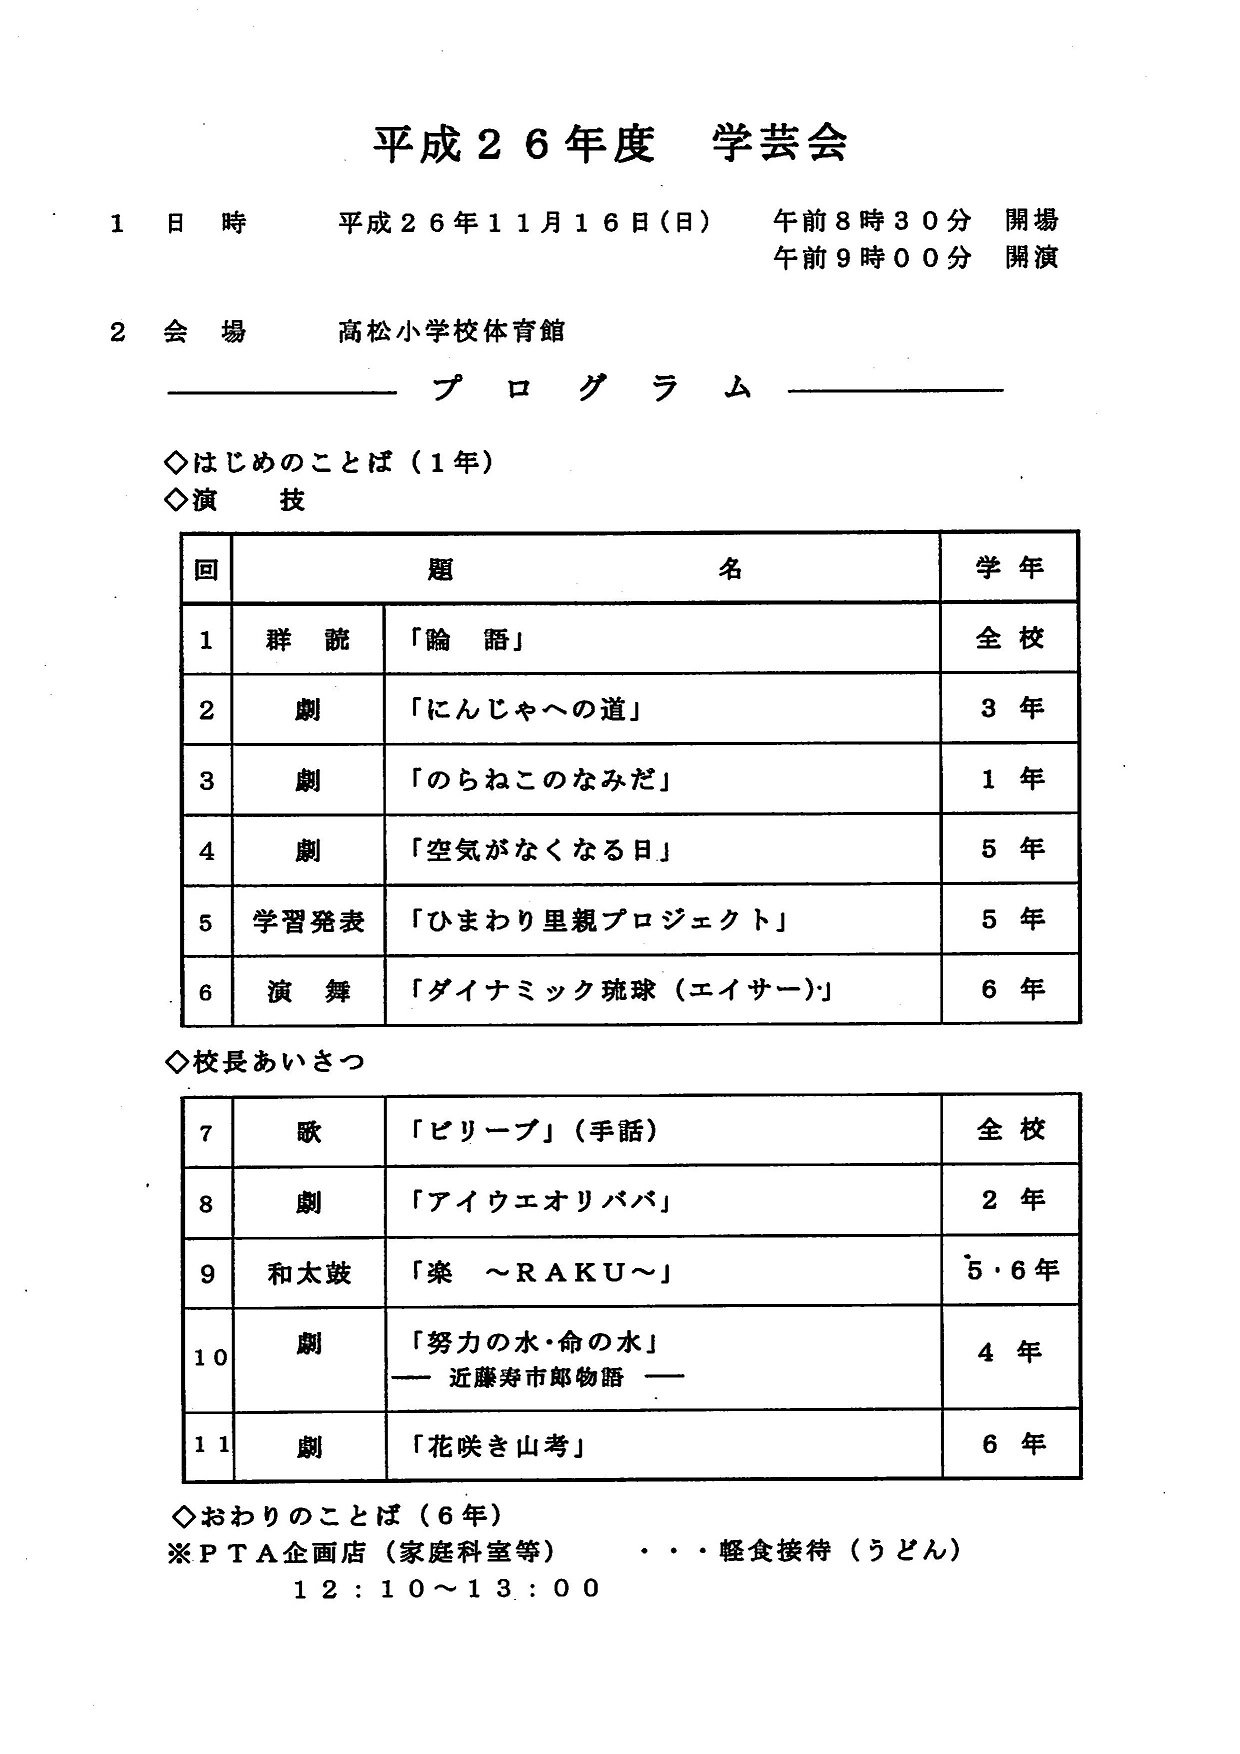 http://www.tahara.ed.jp/takamatsu-e/blog/%E3%83%95%E3%83%AB%20%E3%83%9A%E3%83%BC%E3%82%B8%E5%86%99%E7%9C%9F.jpg